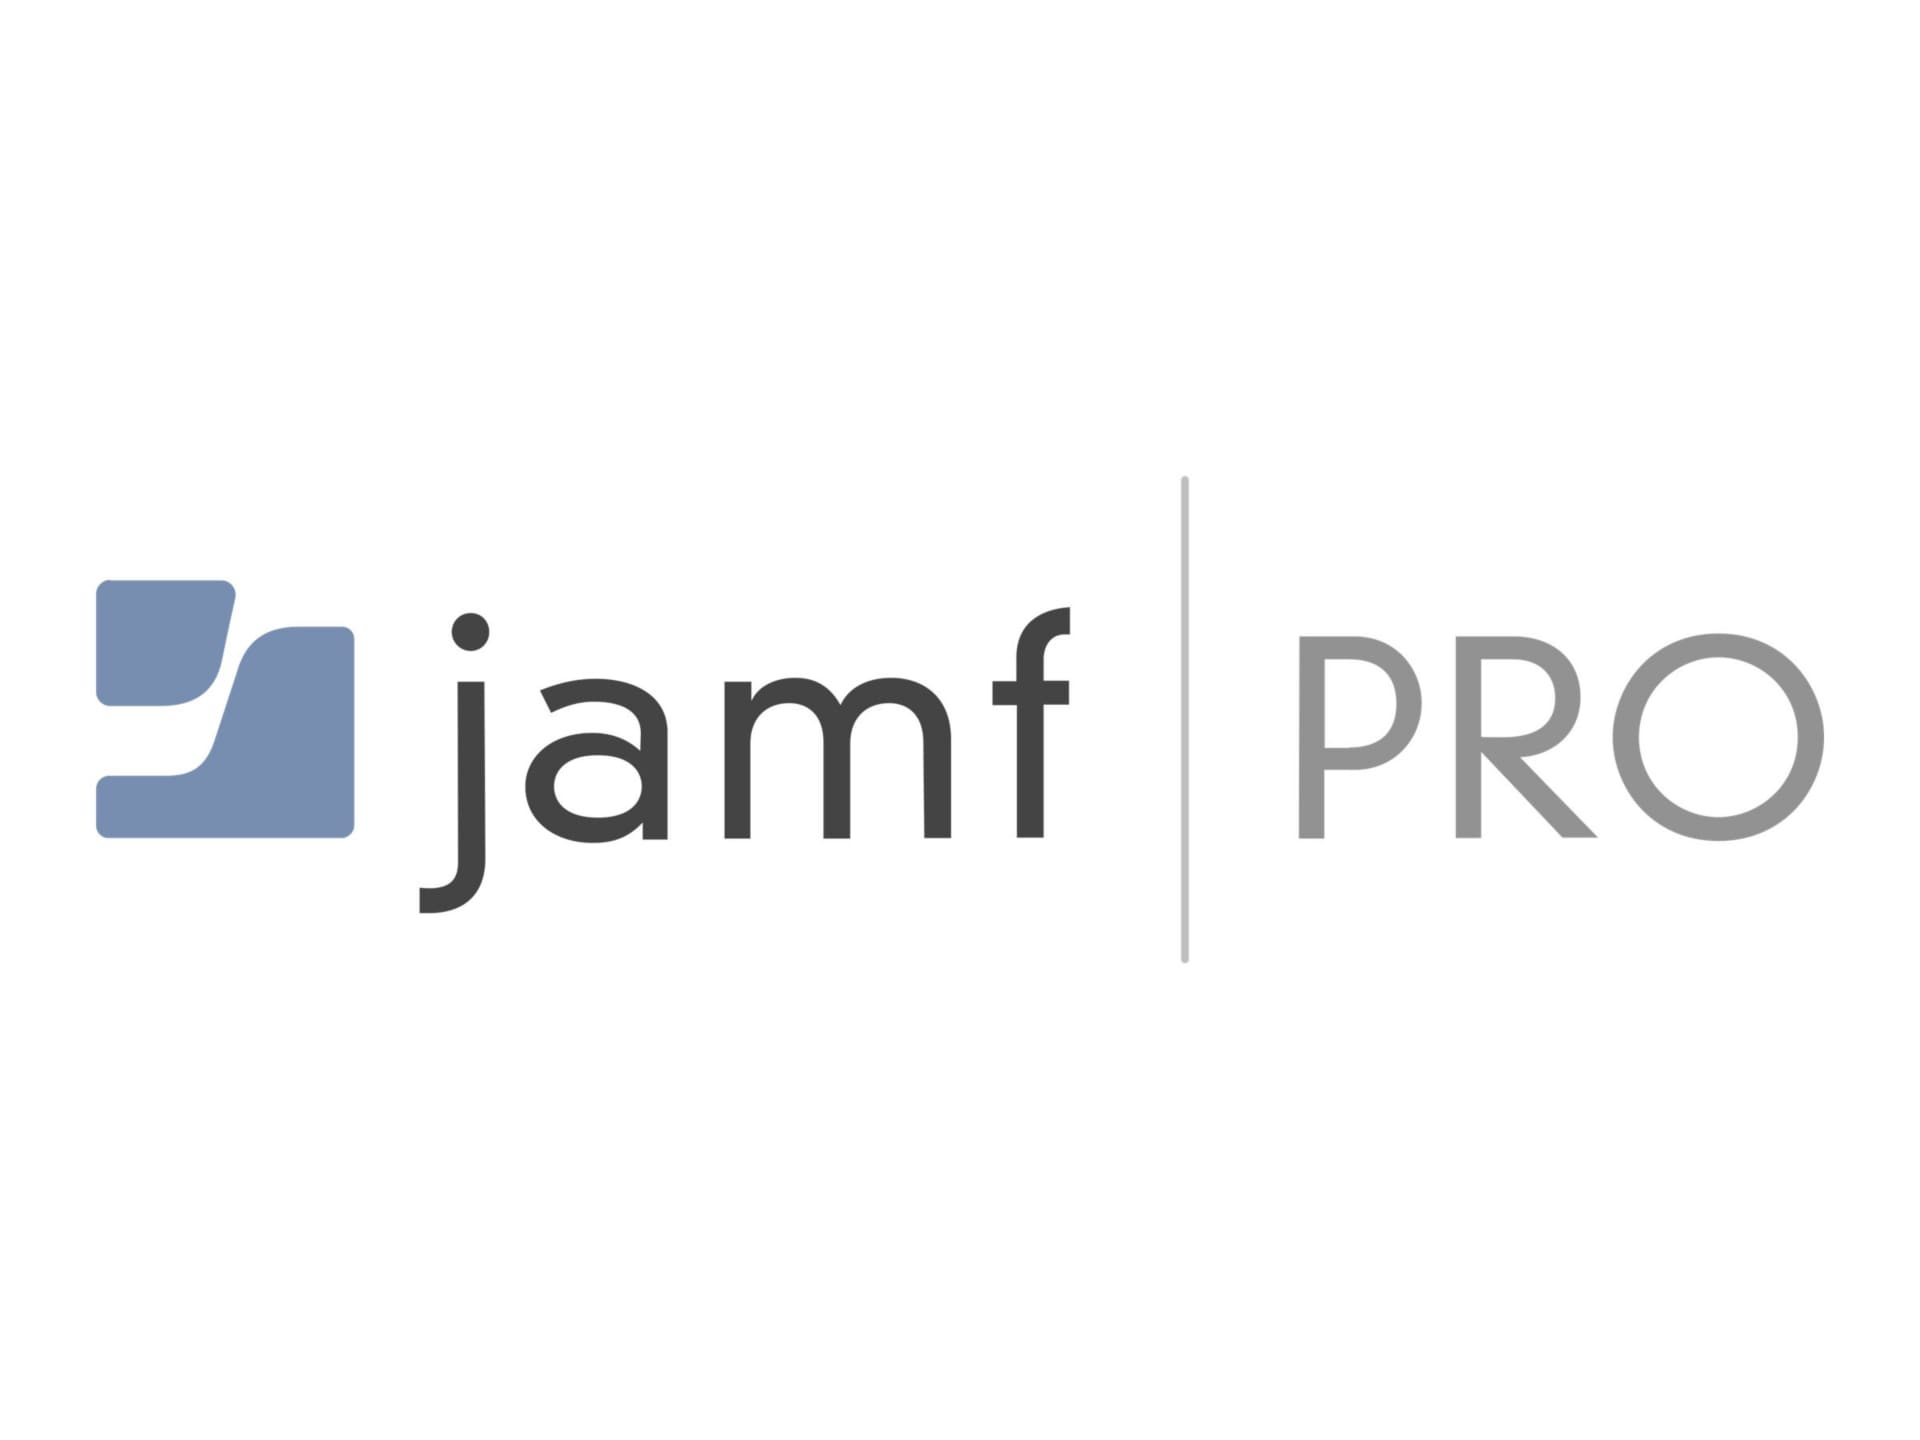 JAMF PRO - subscription license (annual) - 1 device